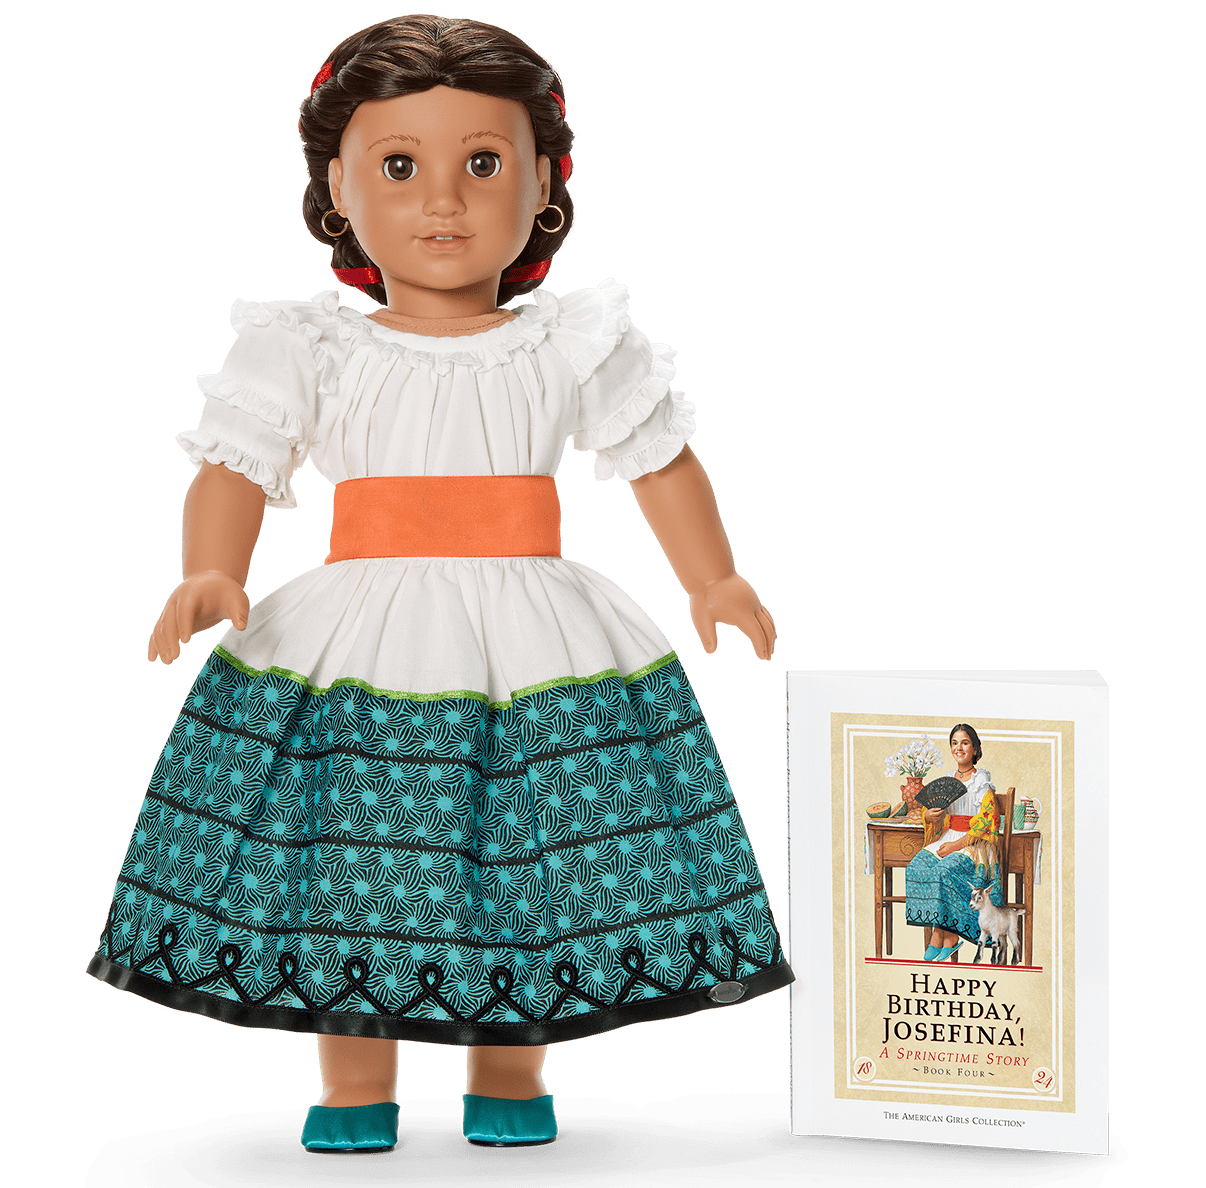 Josefina Montoya doll in her birthday outfit